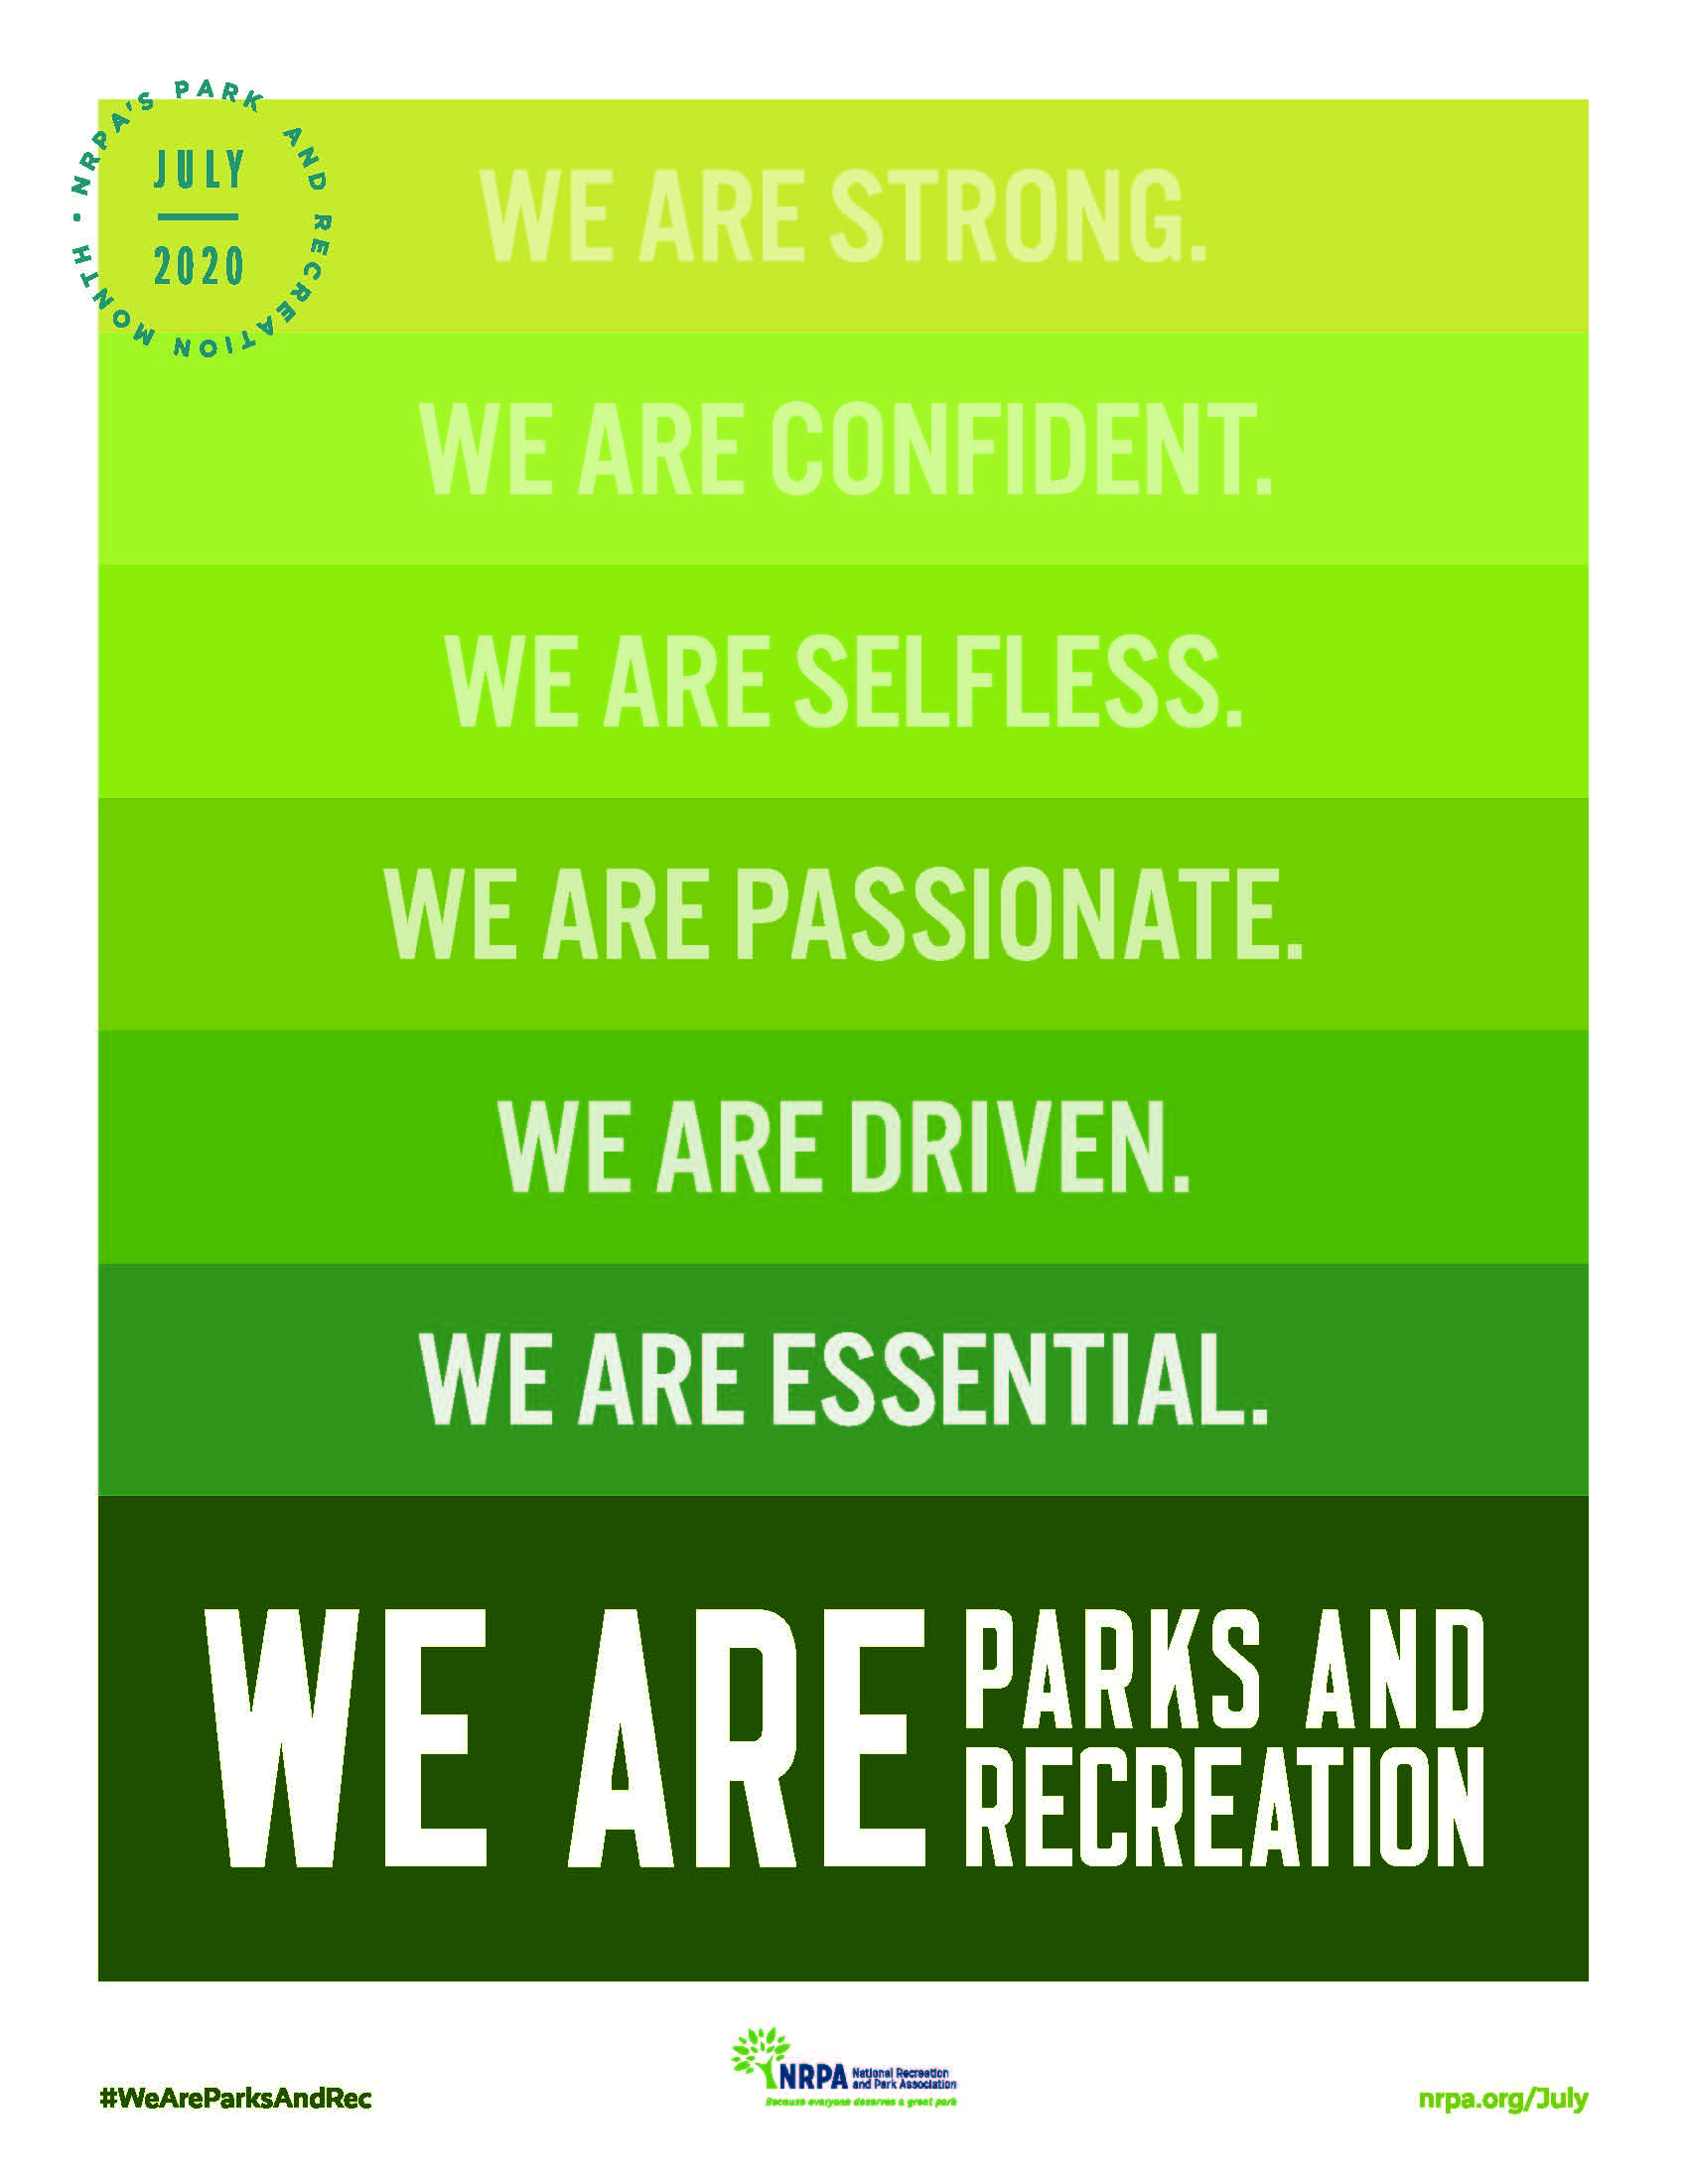 Park News Park Authority